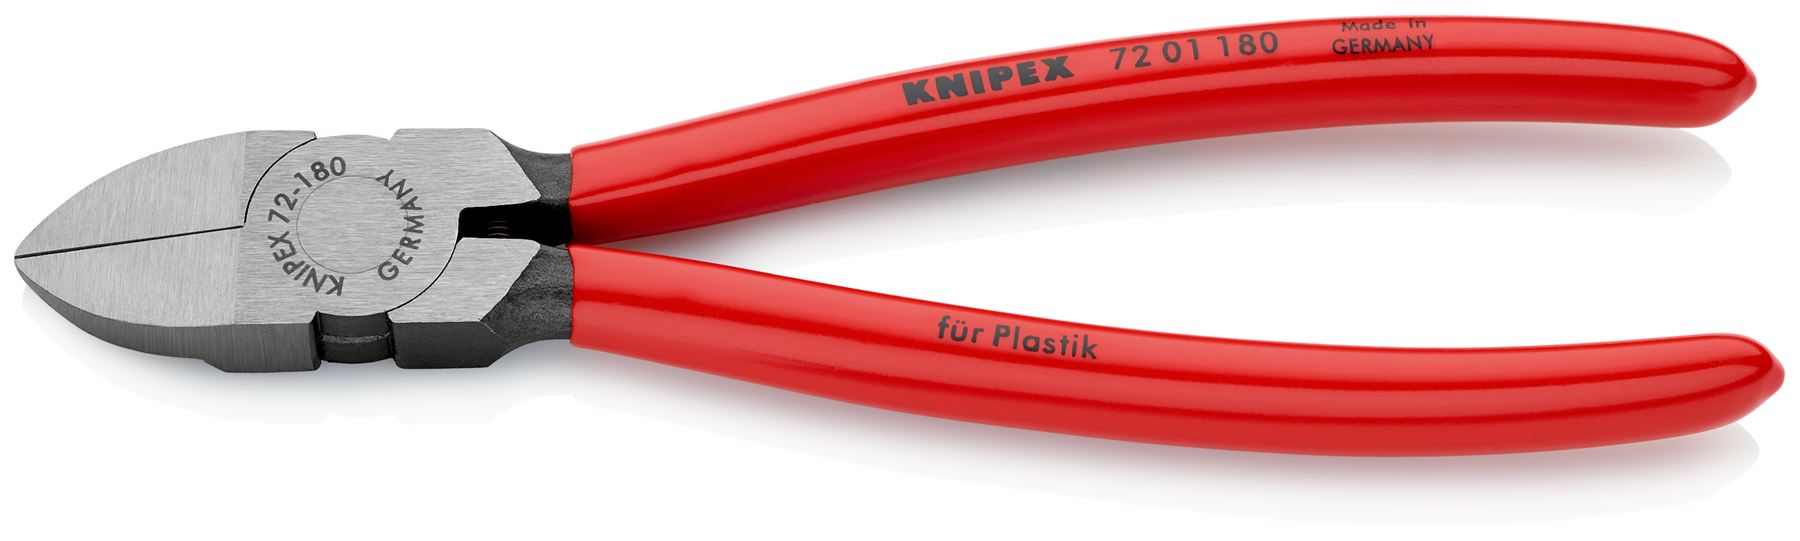 Knipex Cutting Pliers 180mm Diagonal Cutters for Plastics 72 01 180